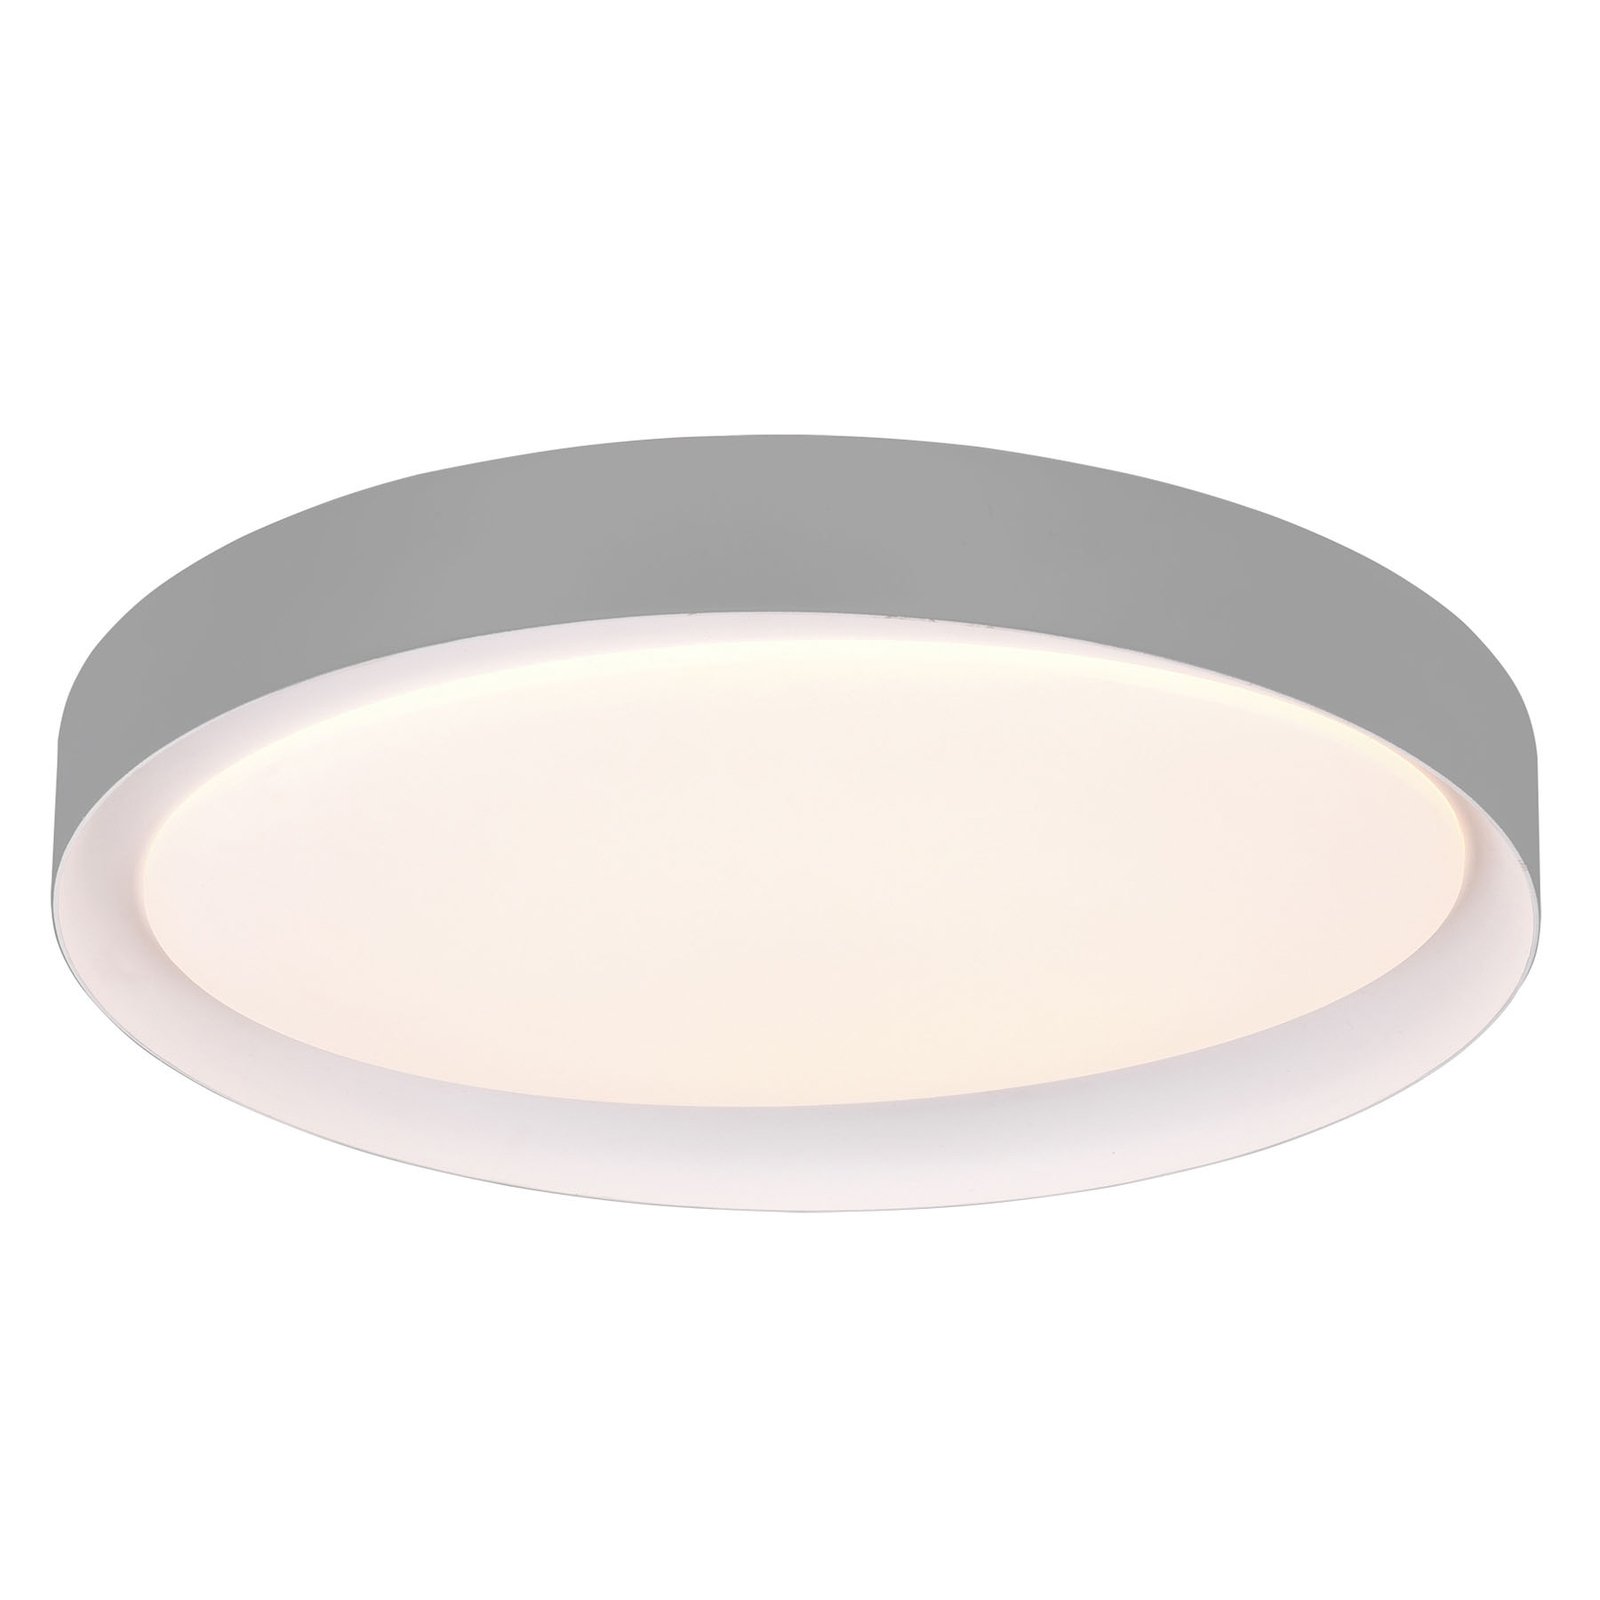 Stropné LED svetlo Zeta tunable white sivé/biele